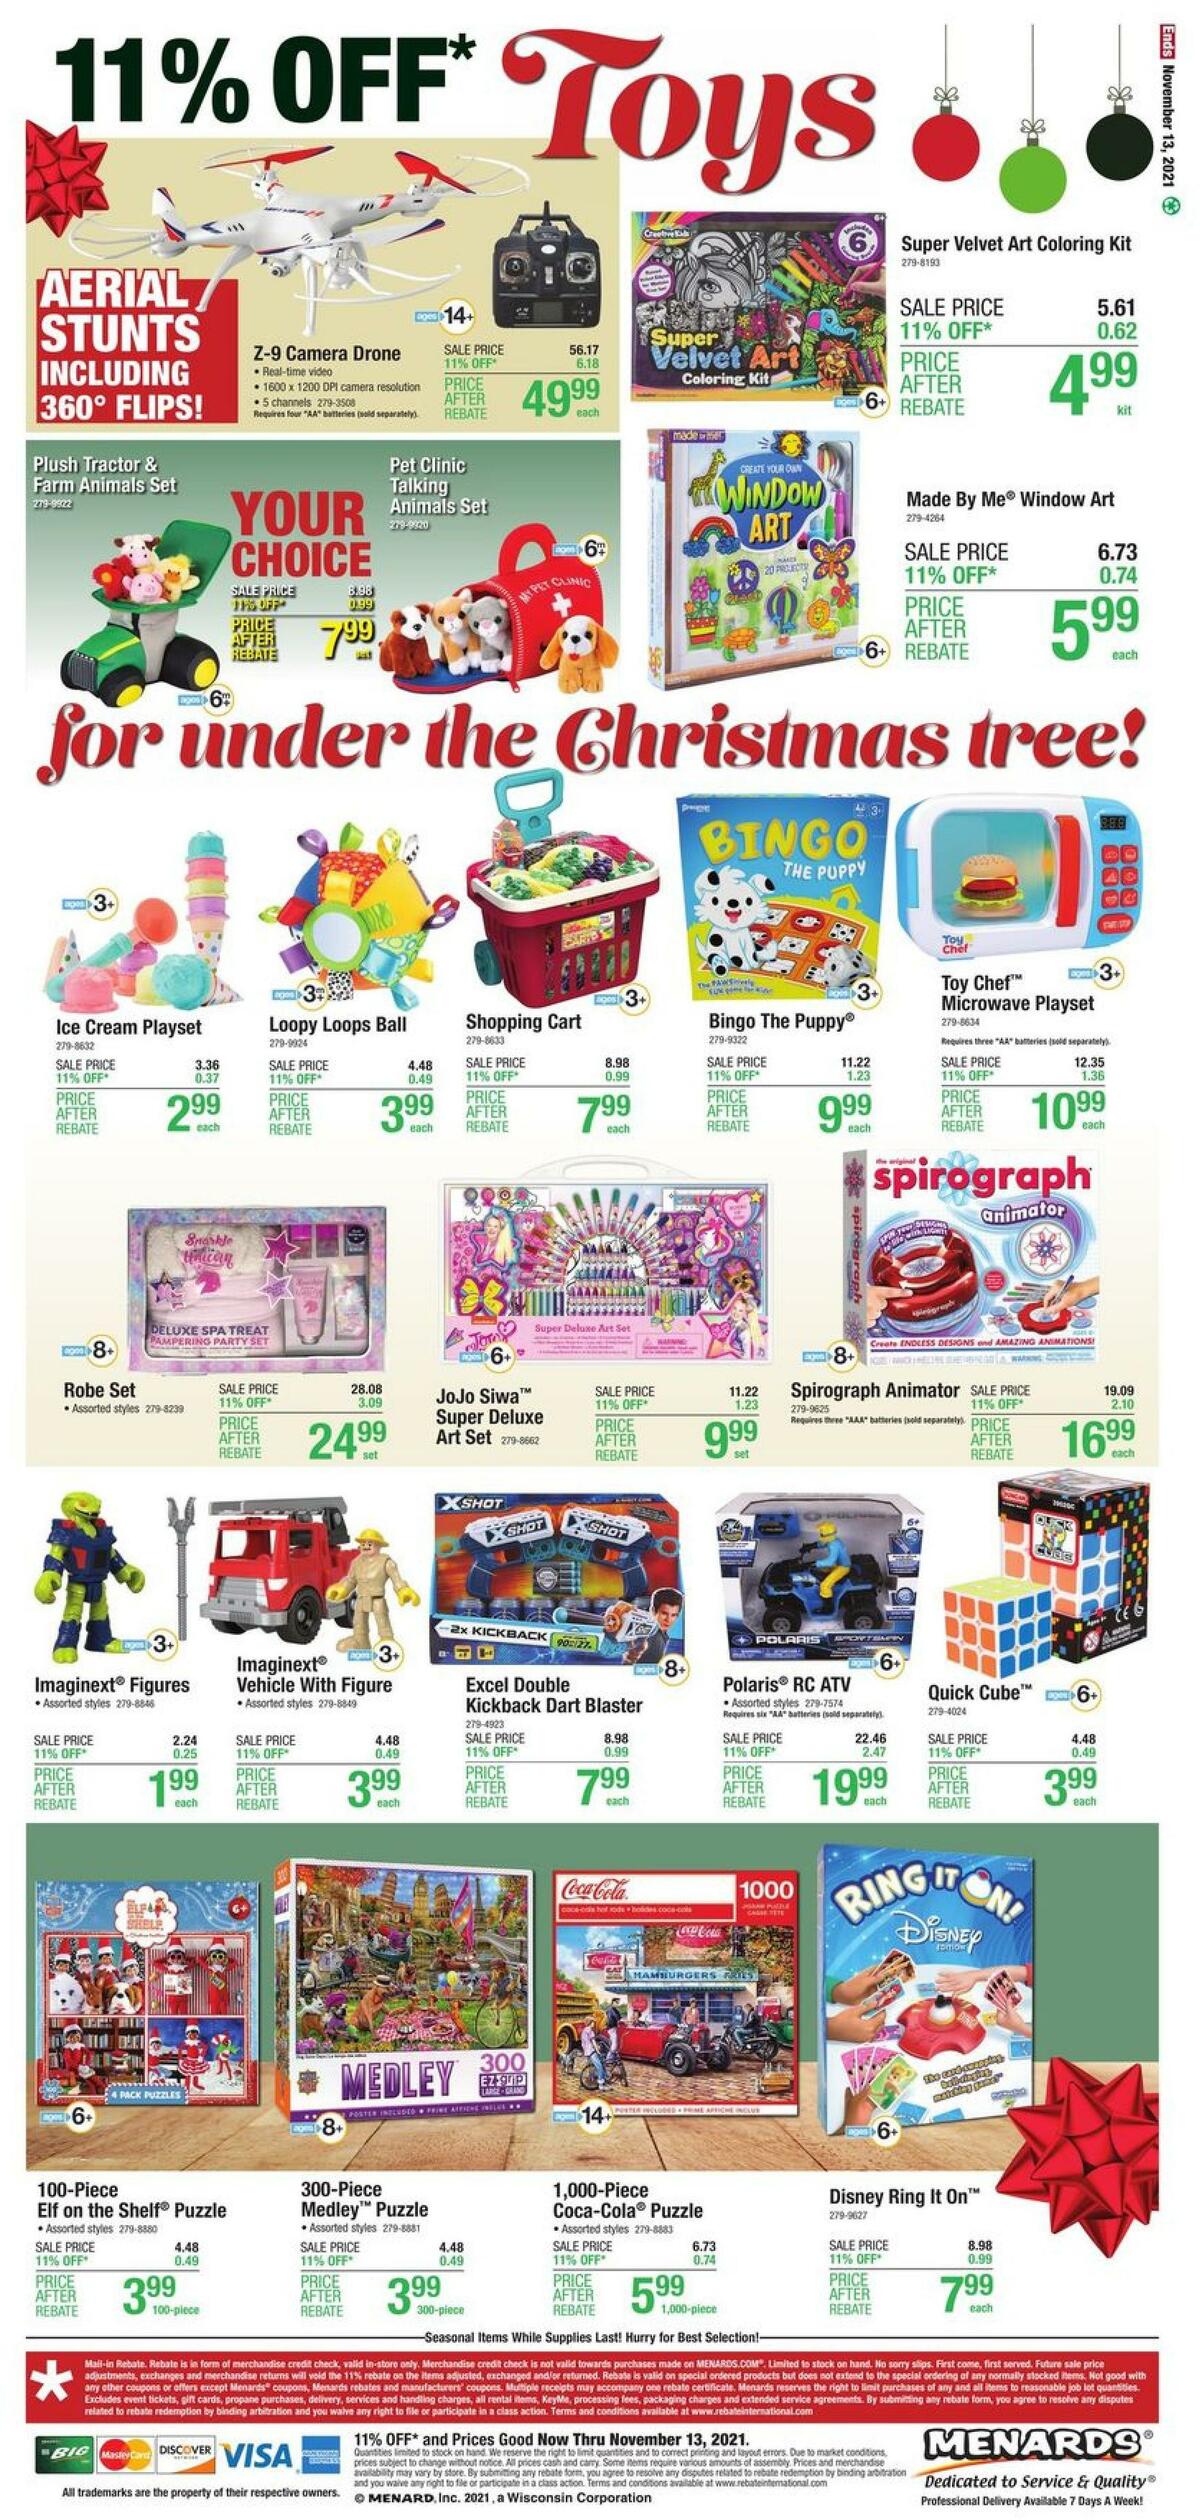 Menards Christmas Decor Weekly Ad from November 4